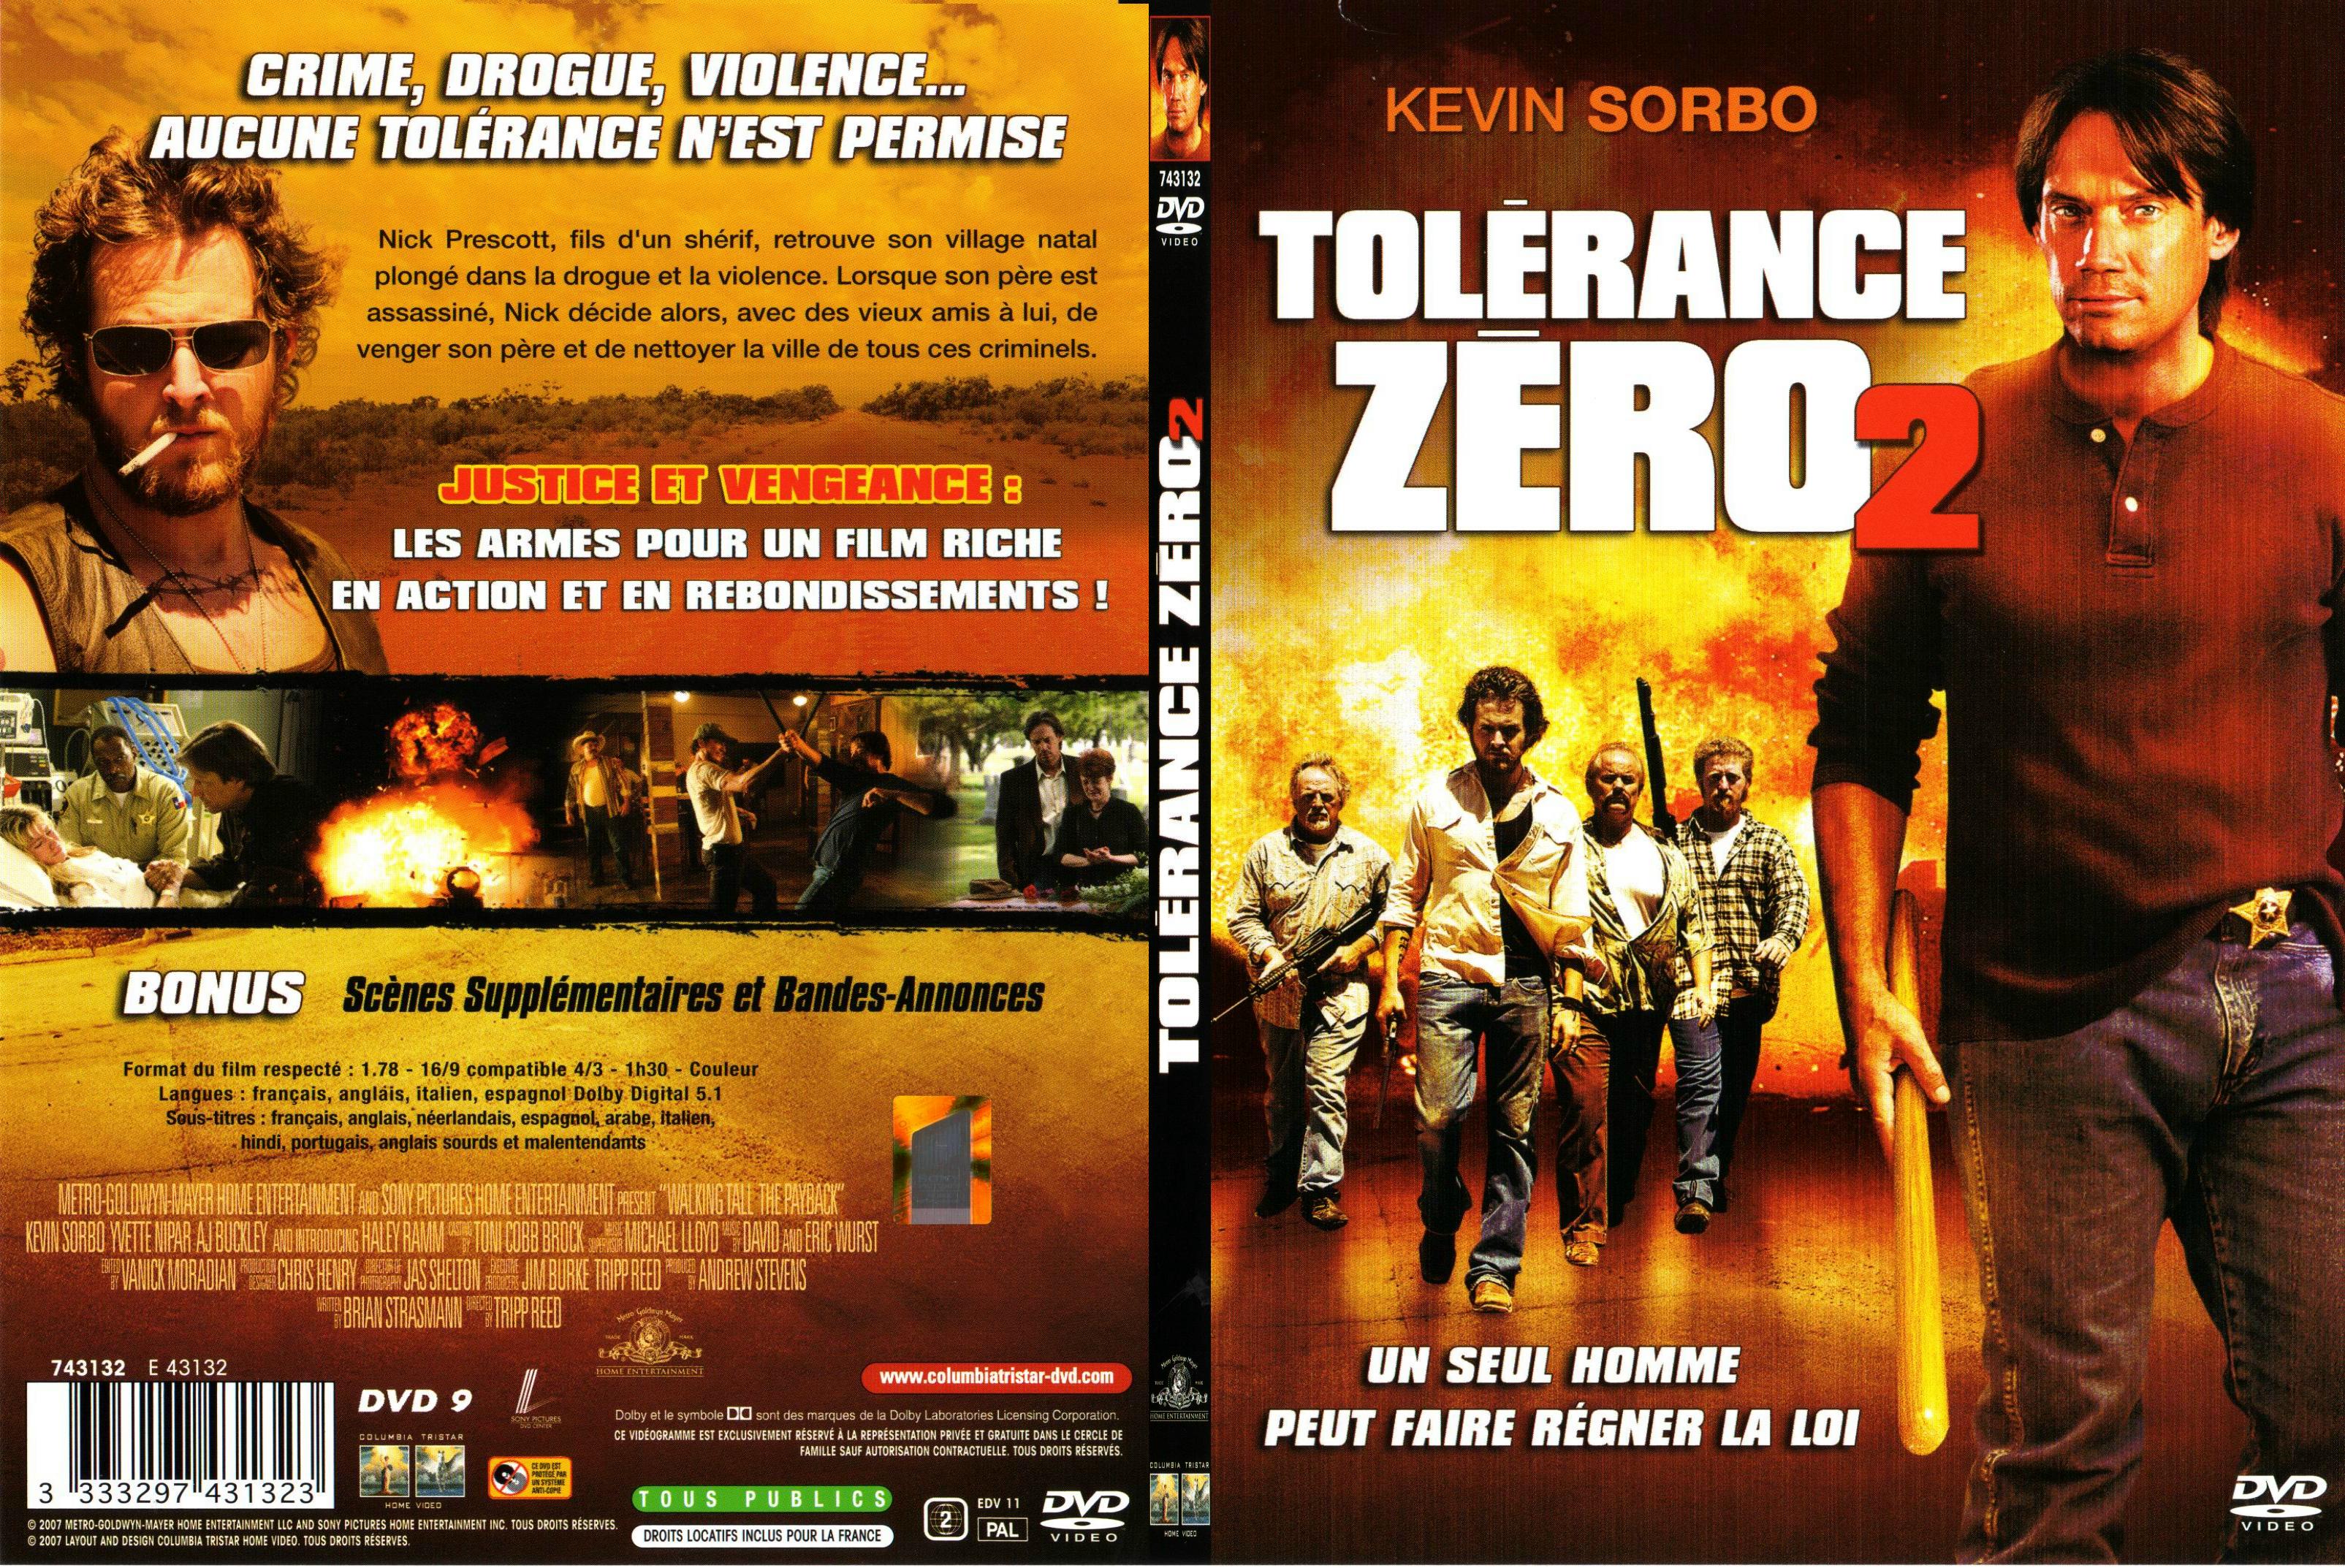 Jaquette DVD Tolerance zero 2 - SLIM